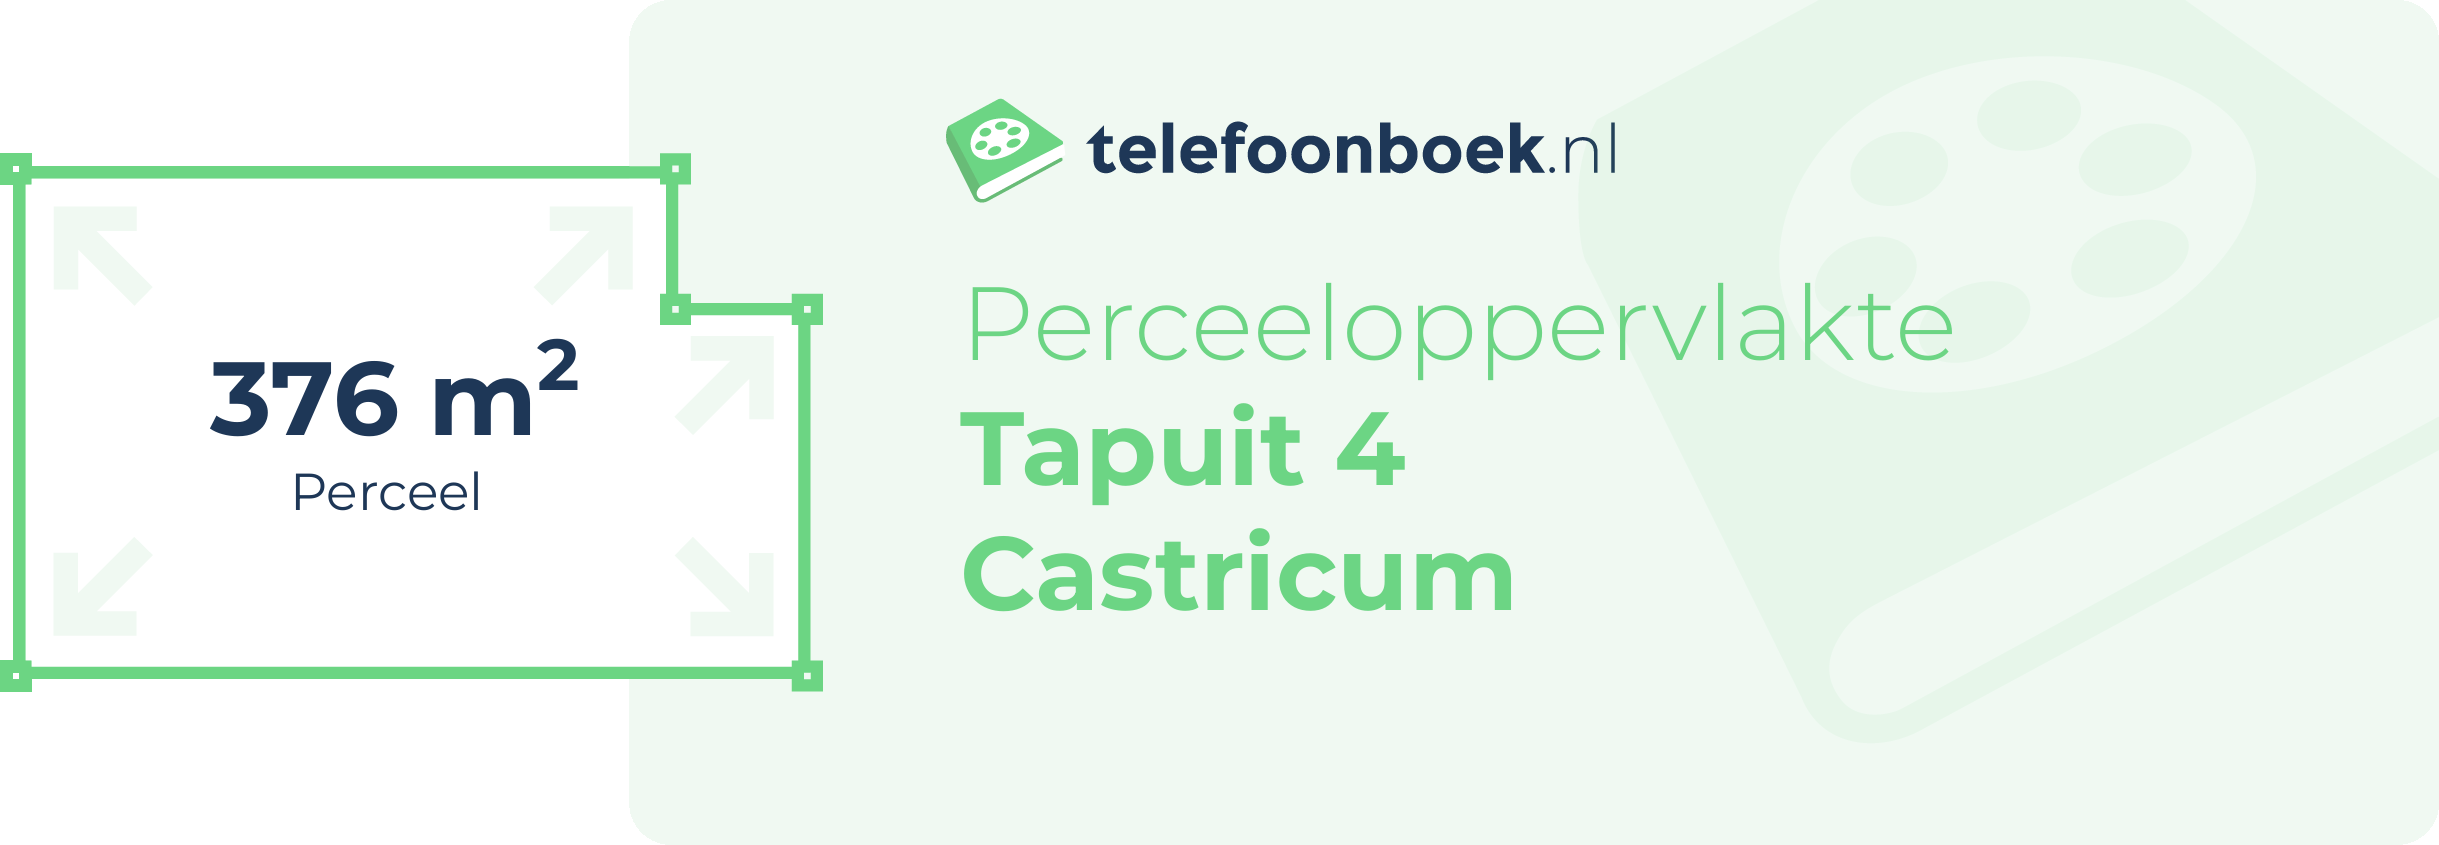 Perceeloppervlakte Tapuit 4 Castricum